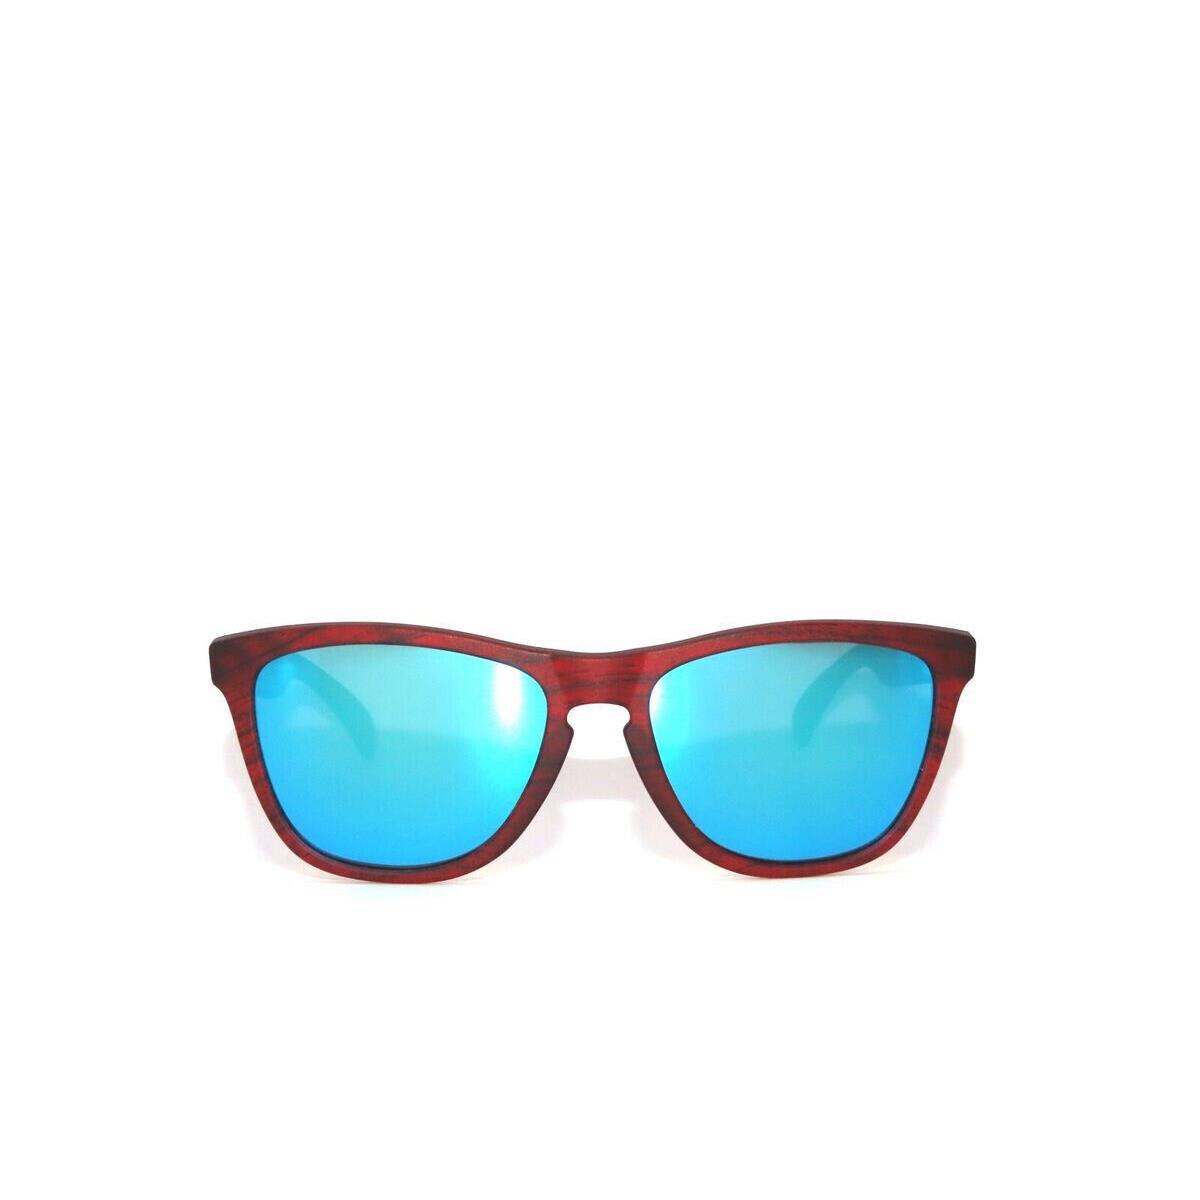 Oakley sunglasses Frogskins - Frame: Matte Red Woodgraine, Lens: Blue 3